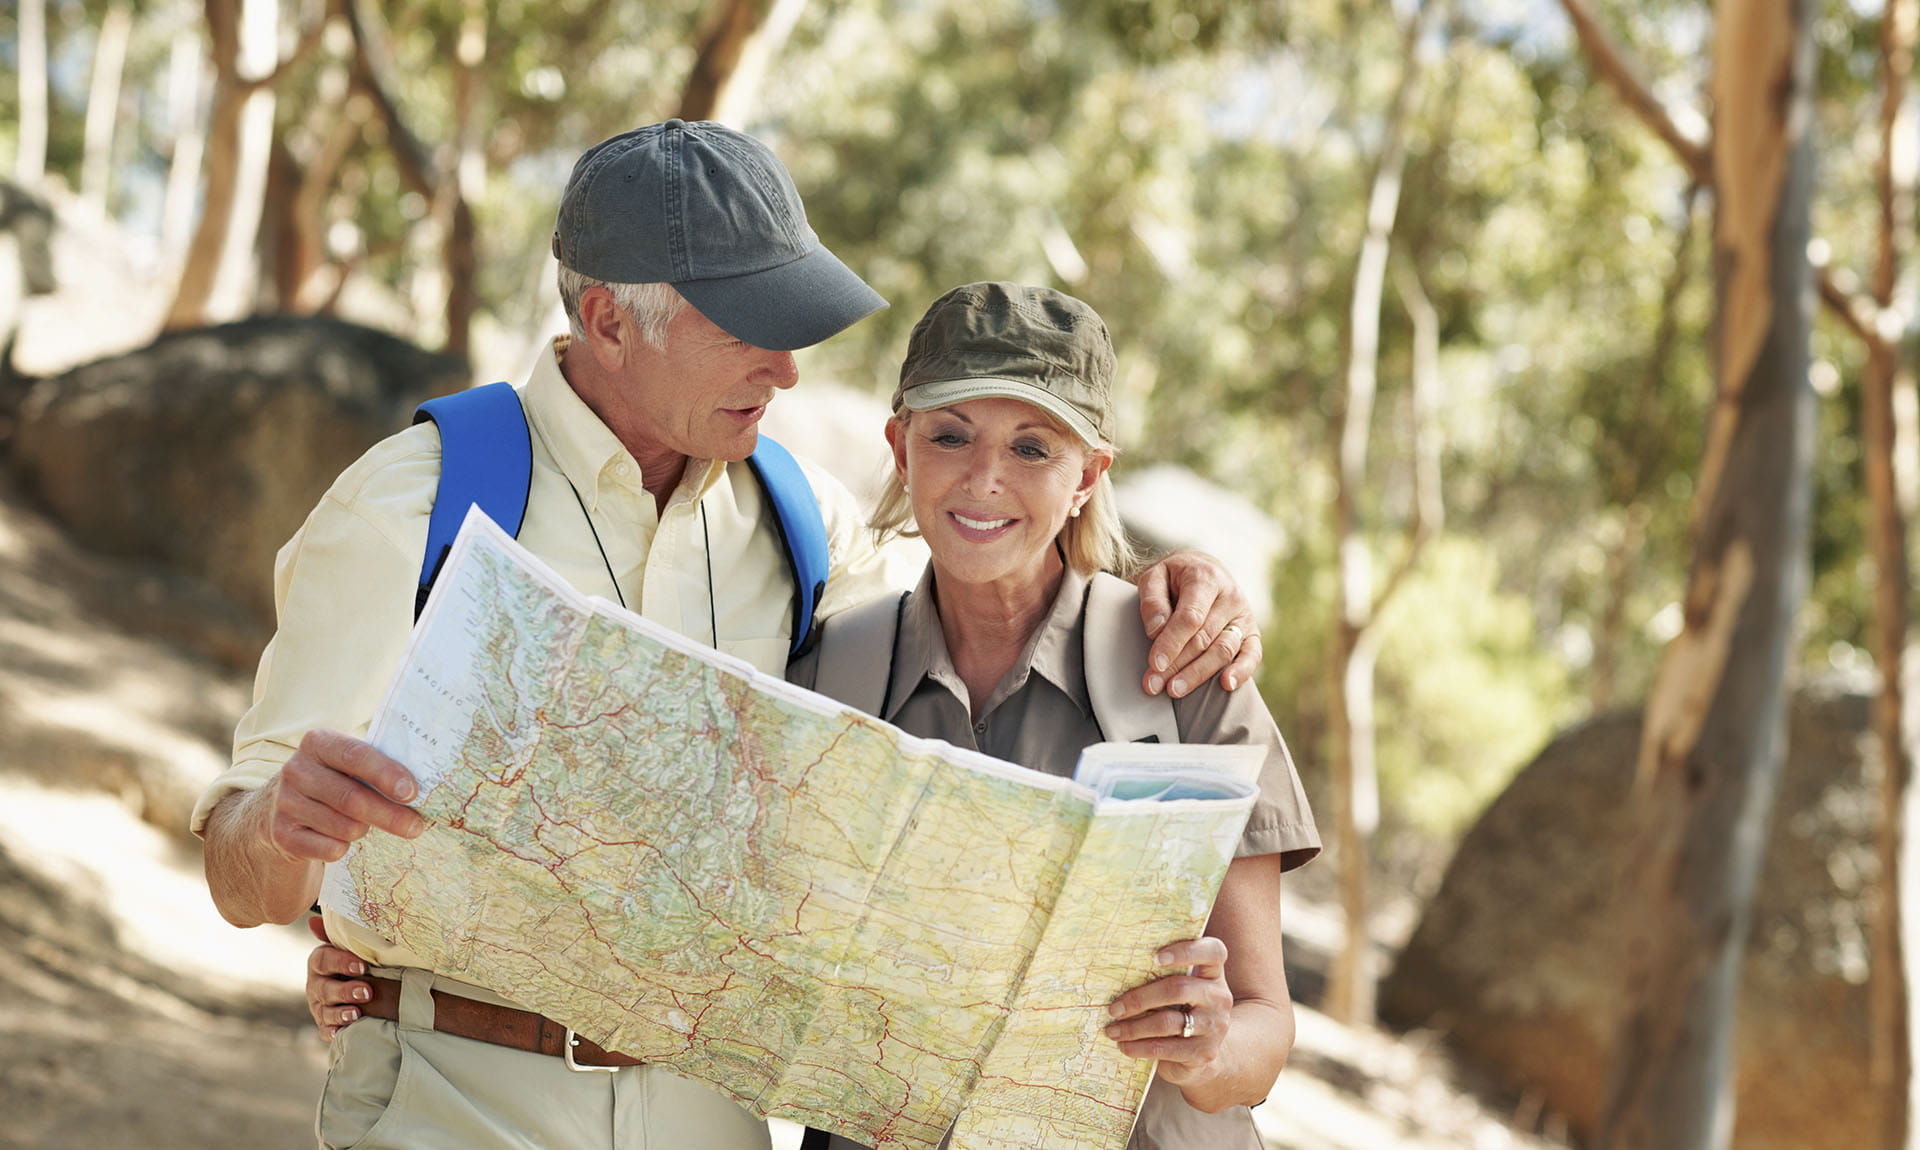 A tourist couple reading a map